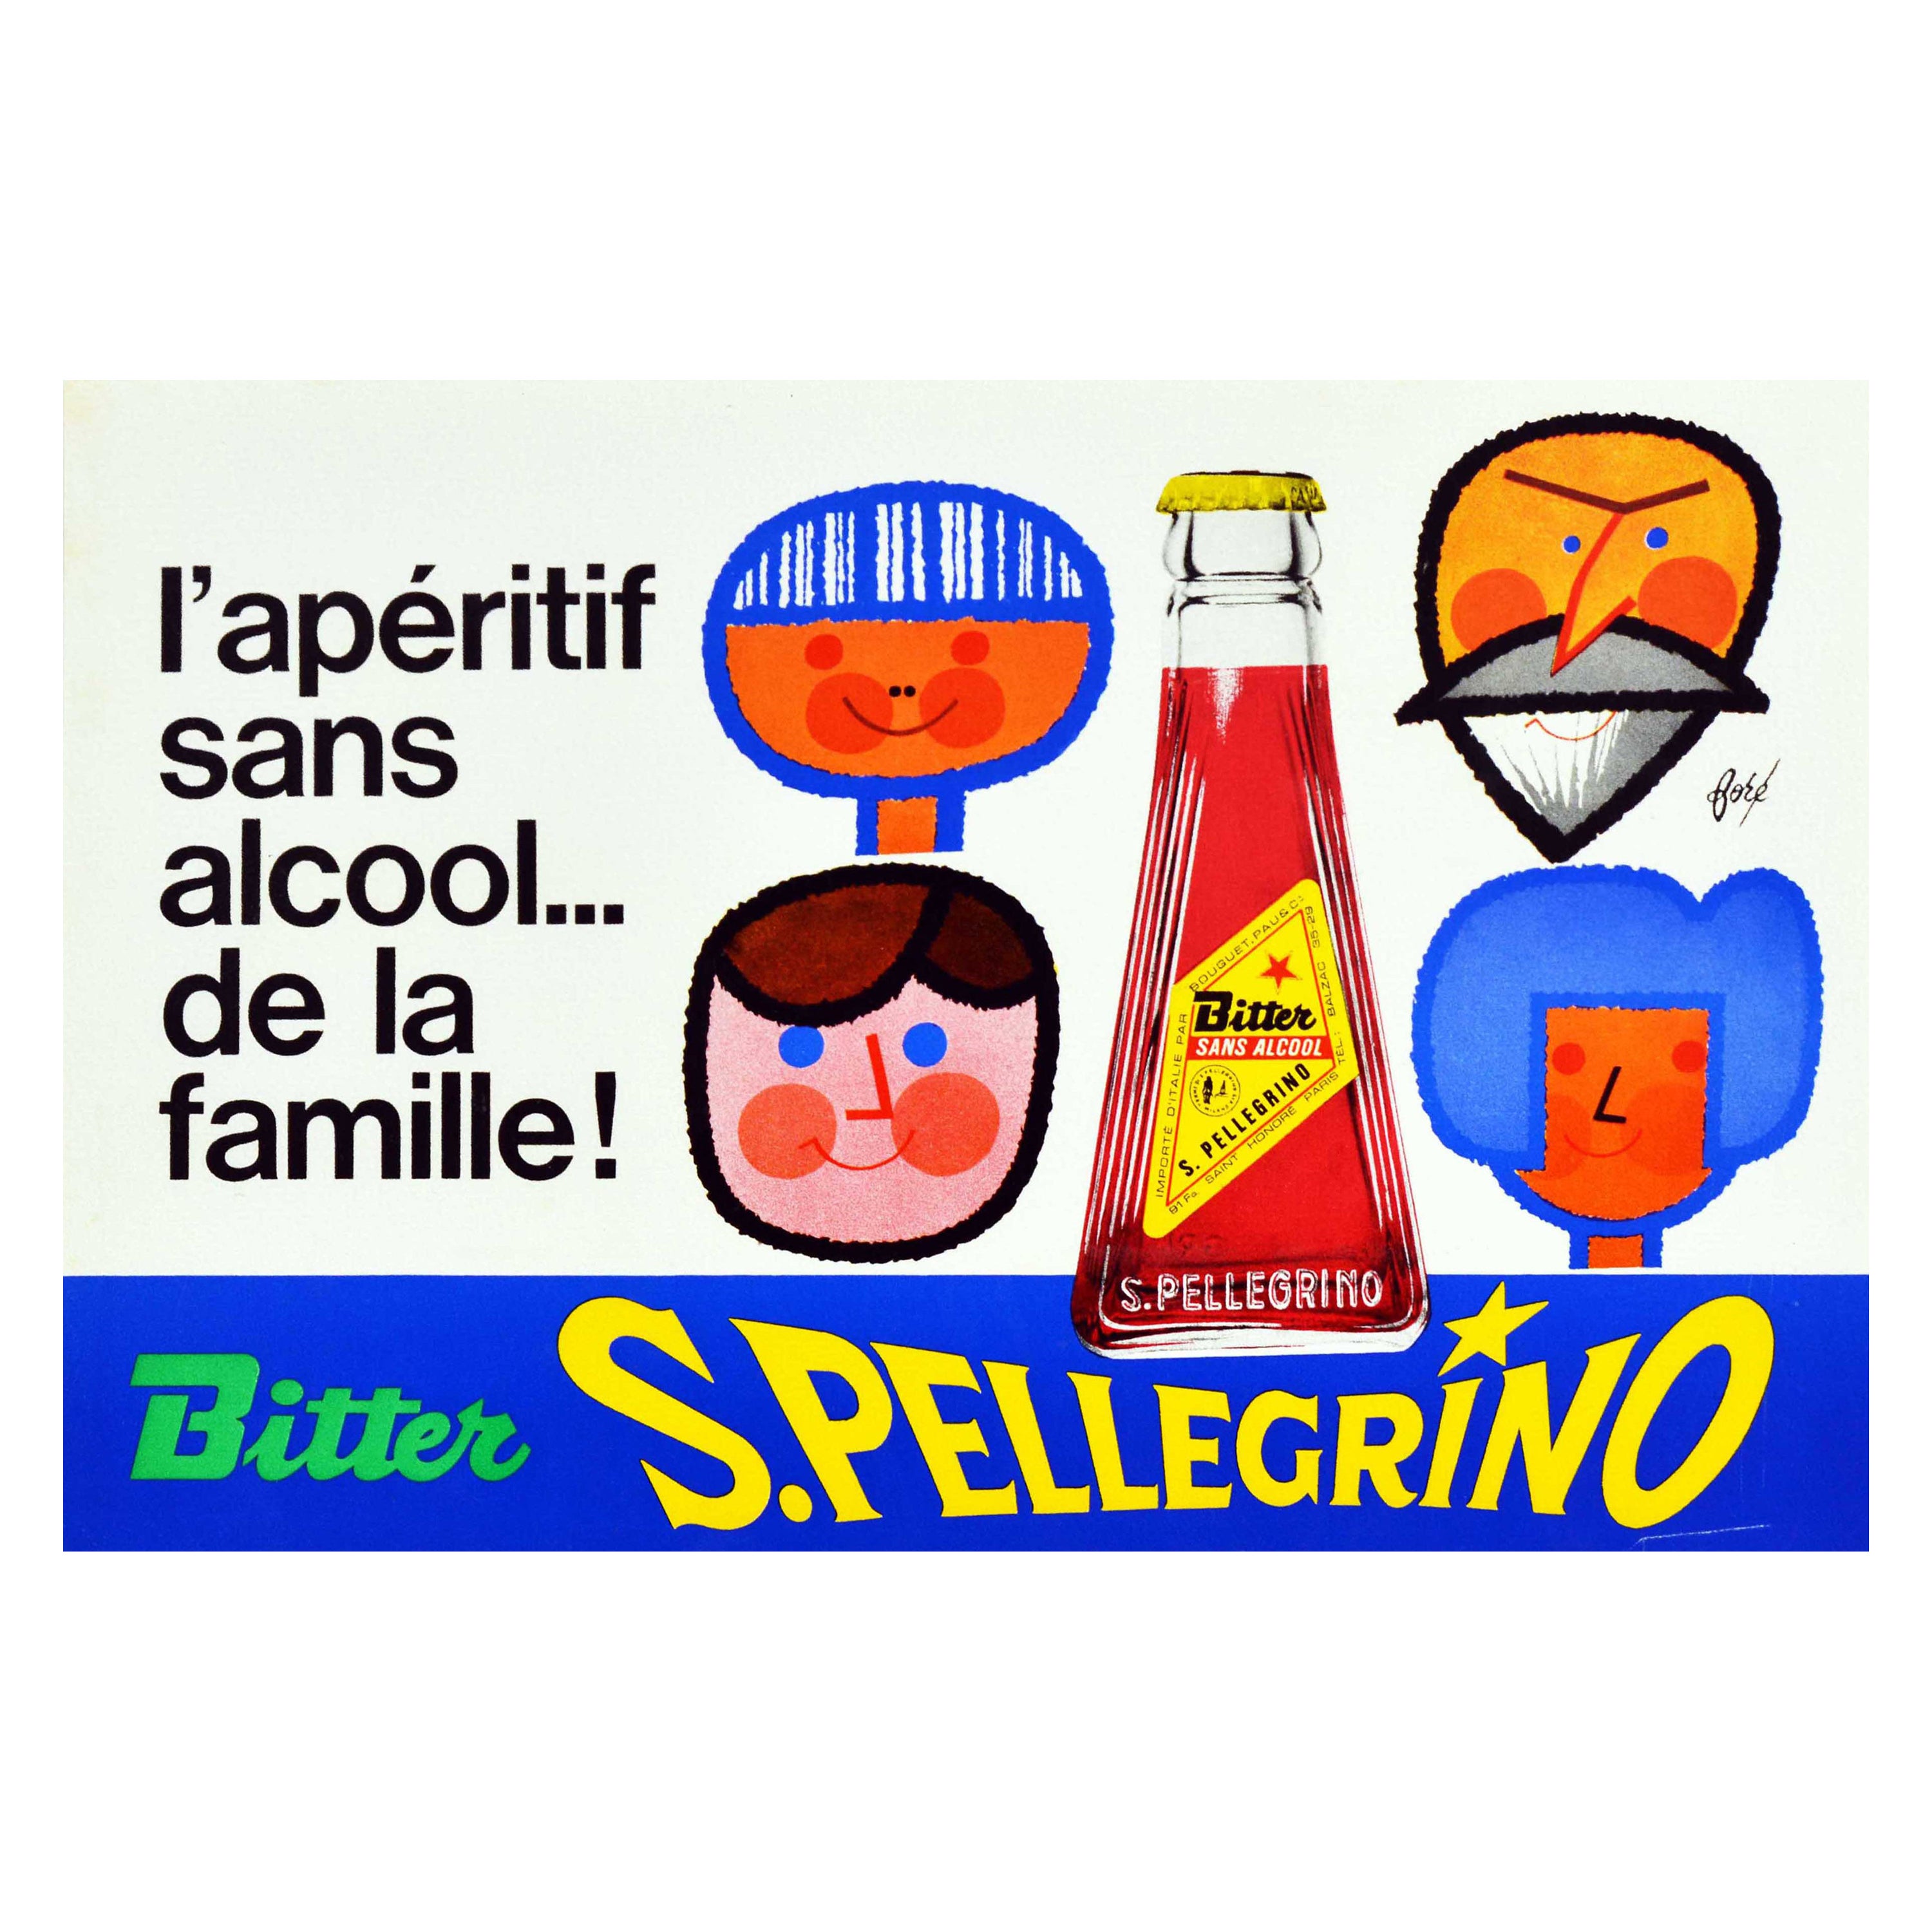 Original Vintage Drink Poster San Pellegrino Bitter Alcohol Free Family Aperitif For Sale